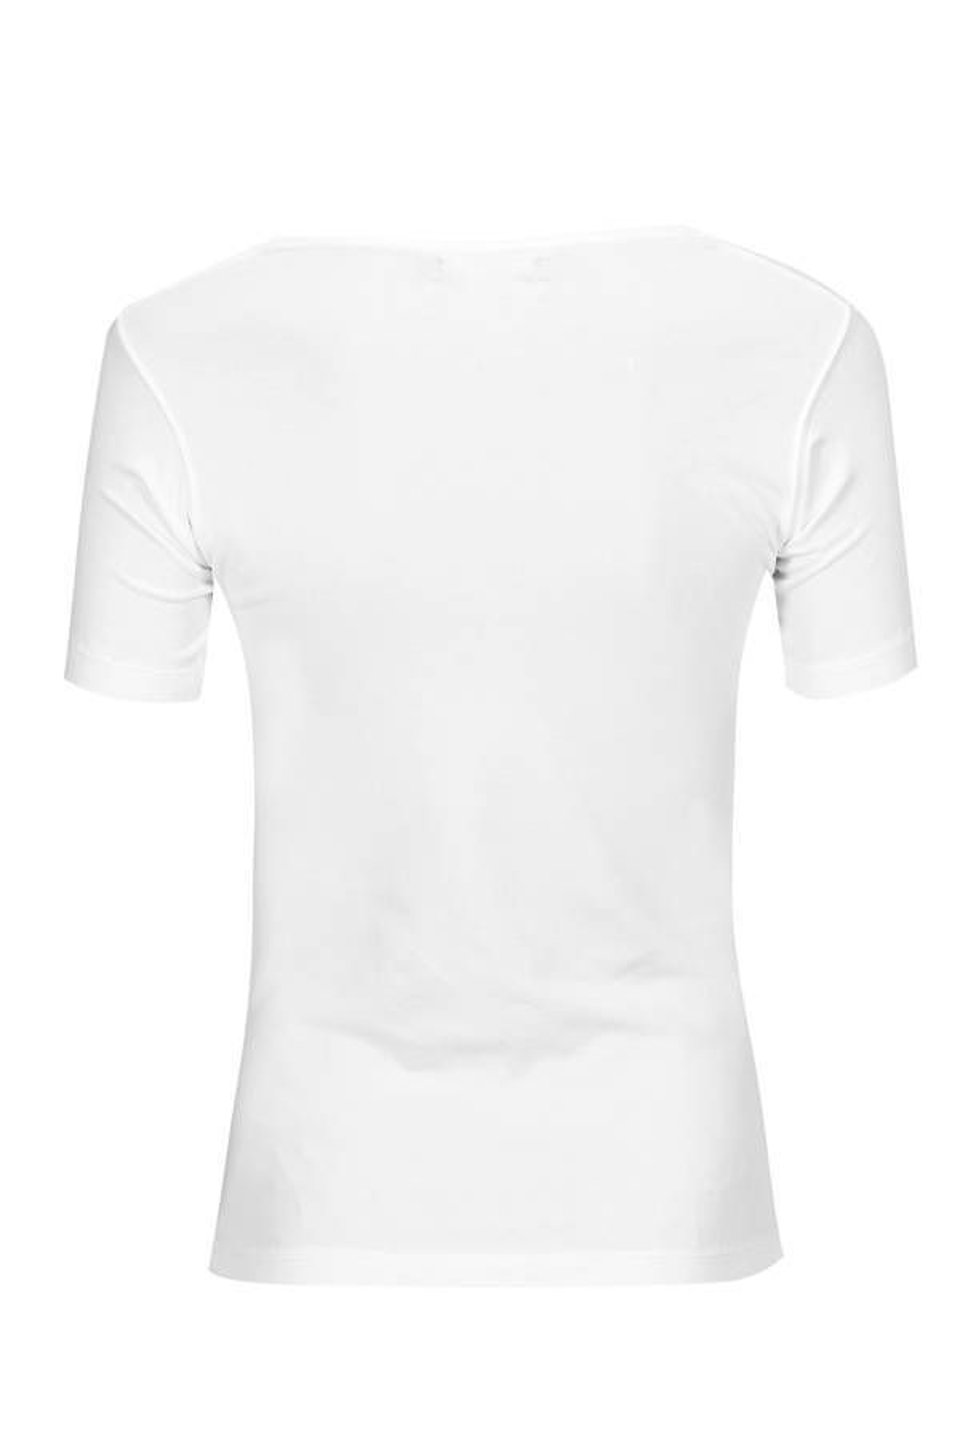 U-Neck Short Sleeve - White